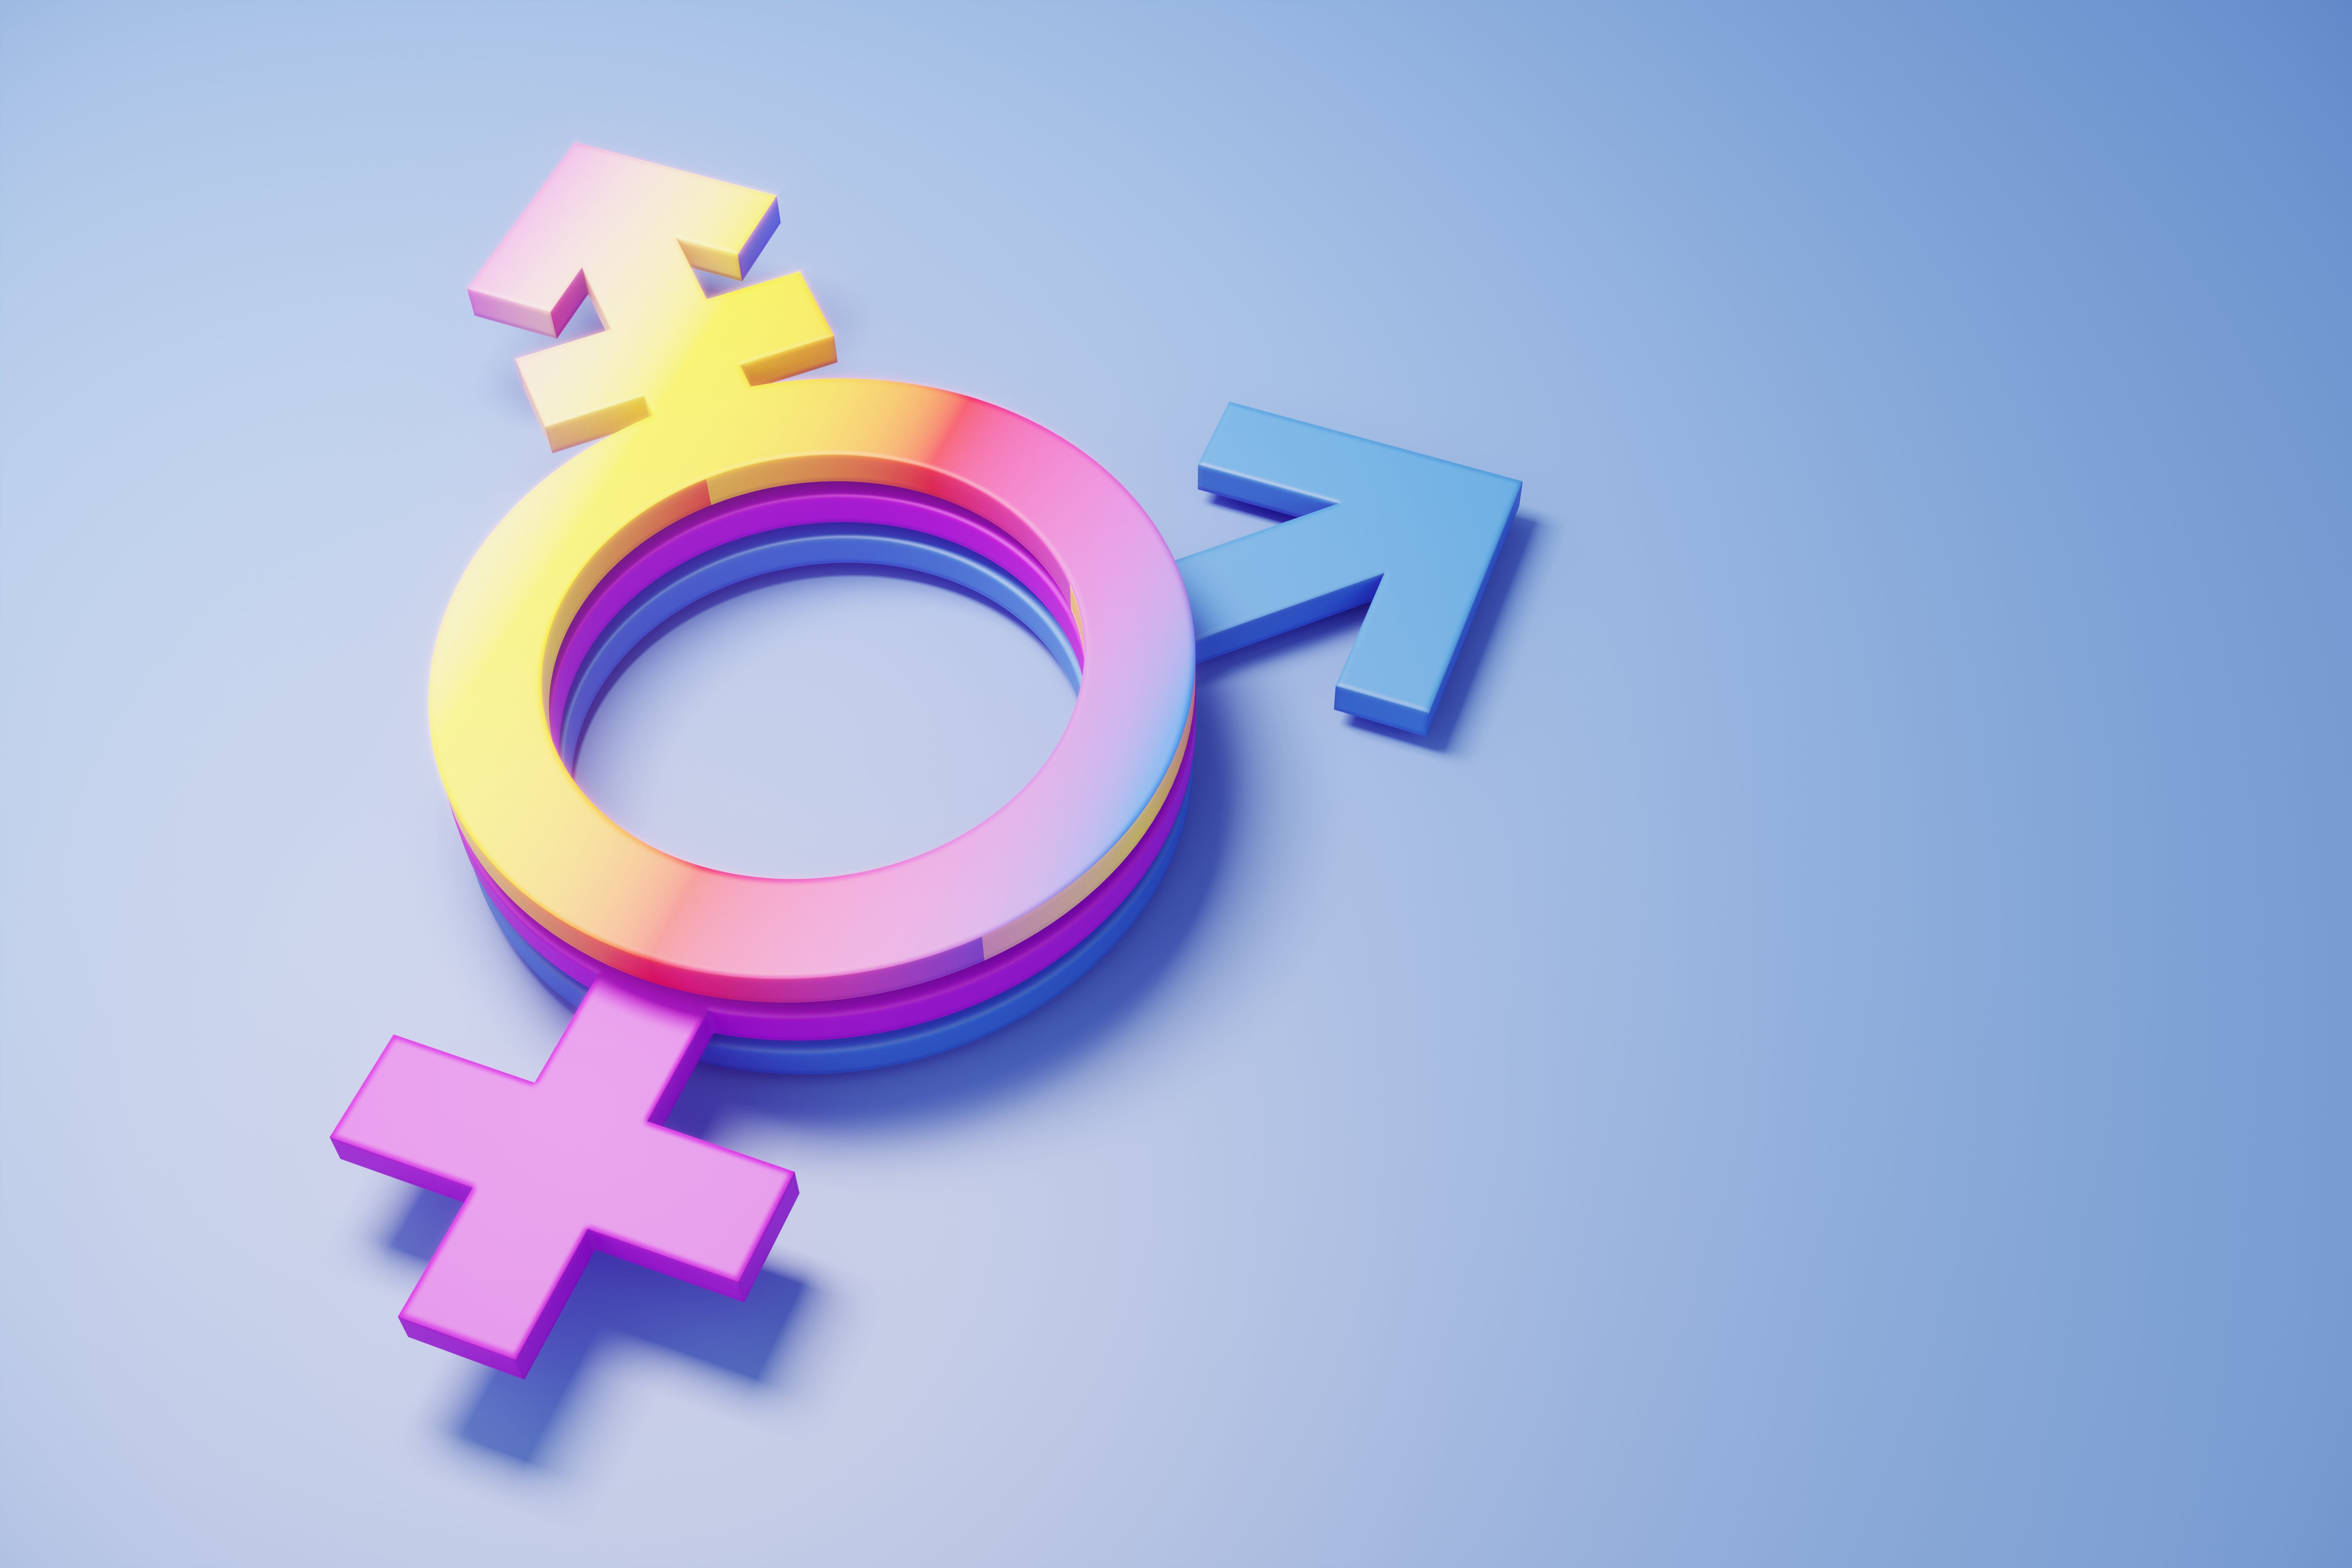 Victorian Supreme Court hears case on 'systemic' gender discrimination